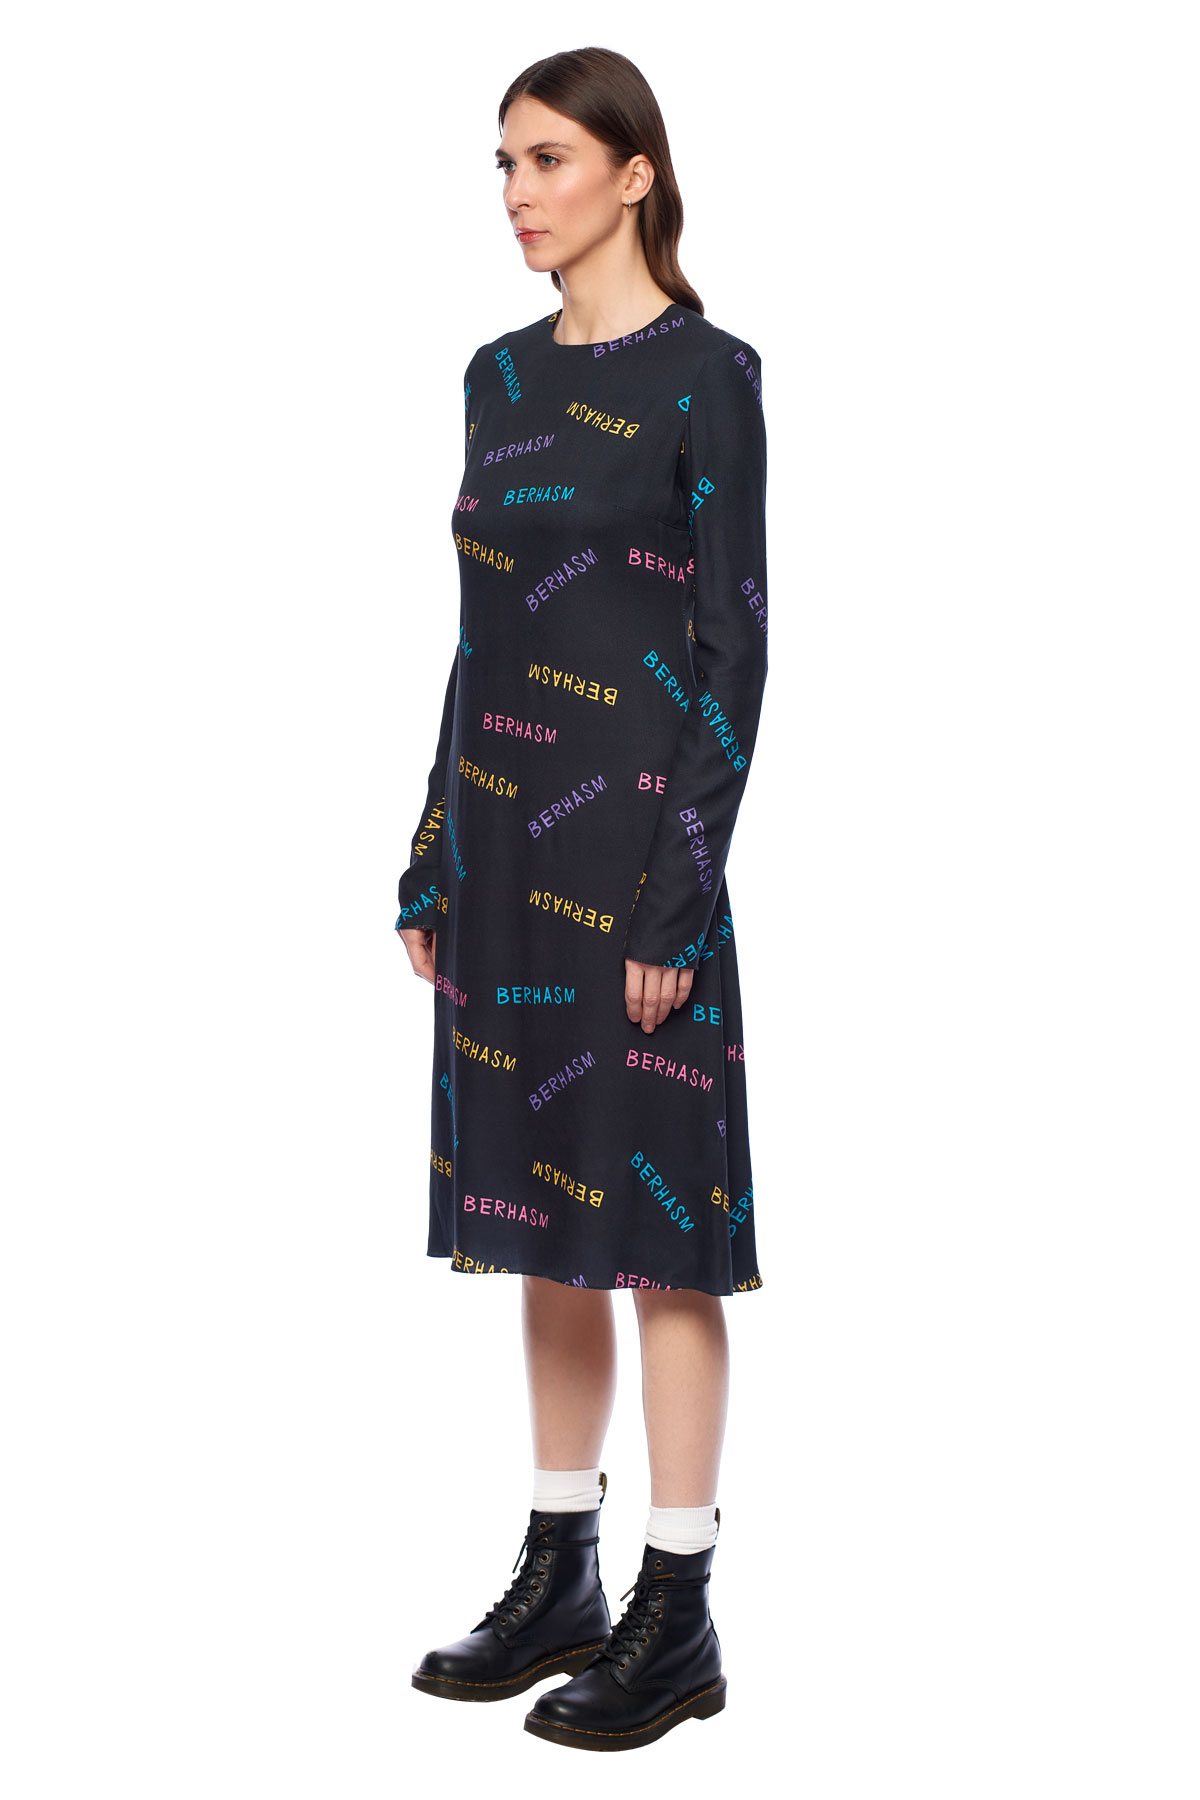 Berhasm logo print dress